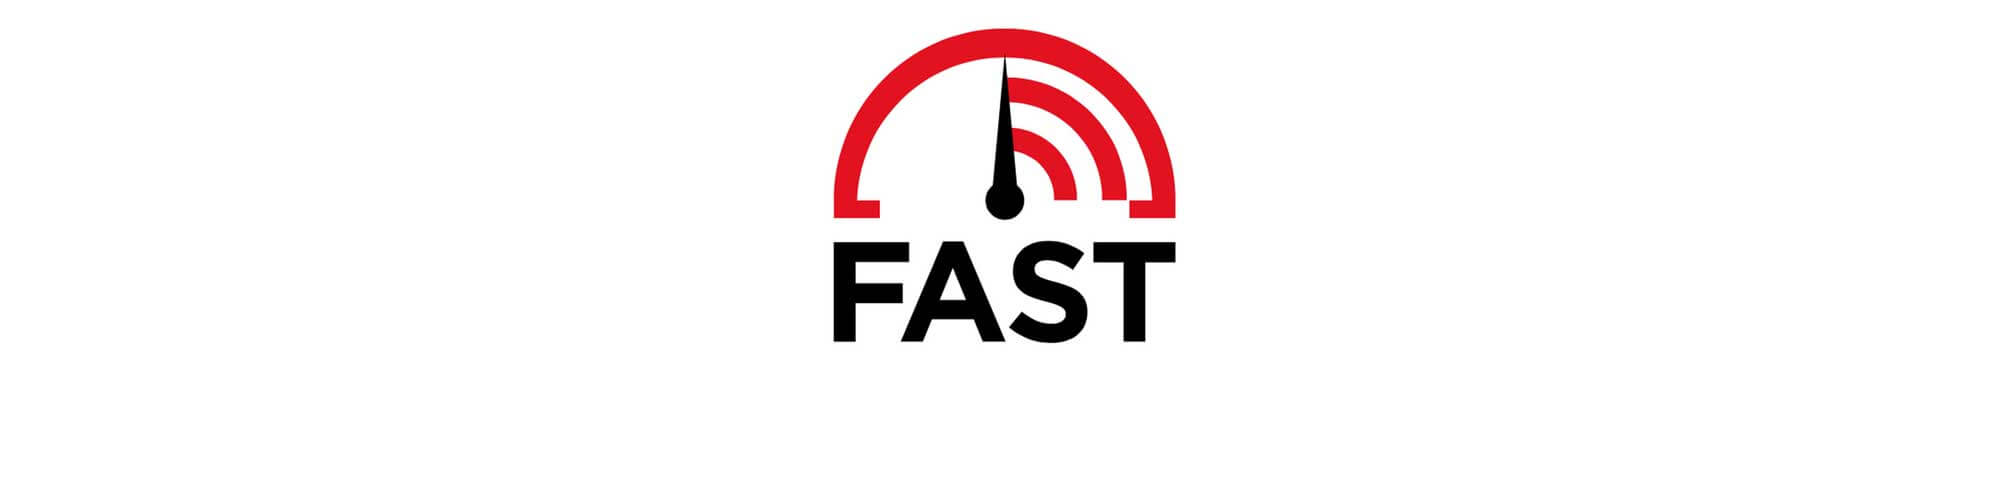  Fast.com   latency   upload!